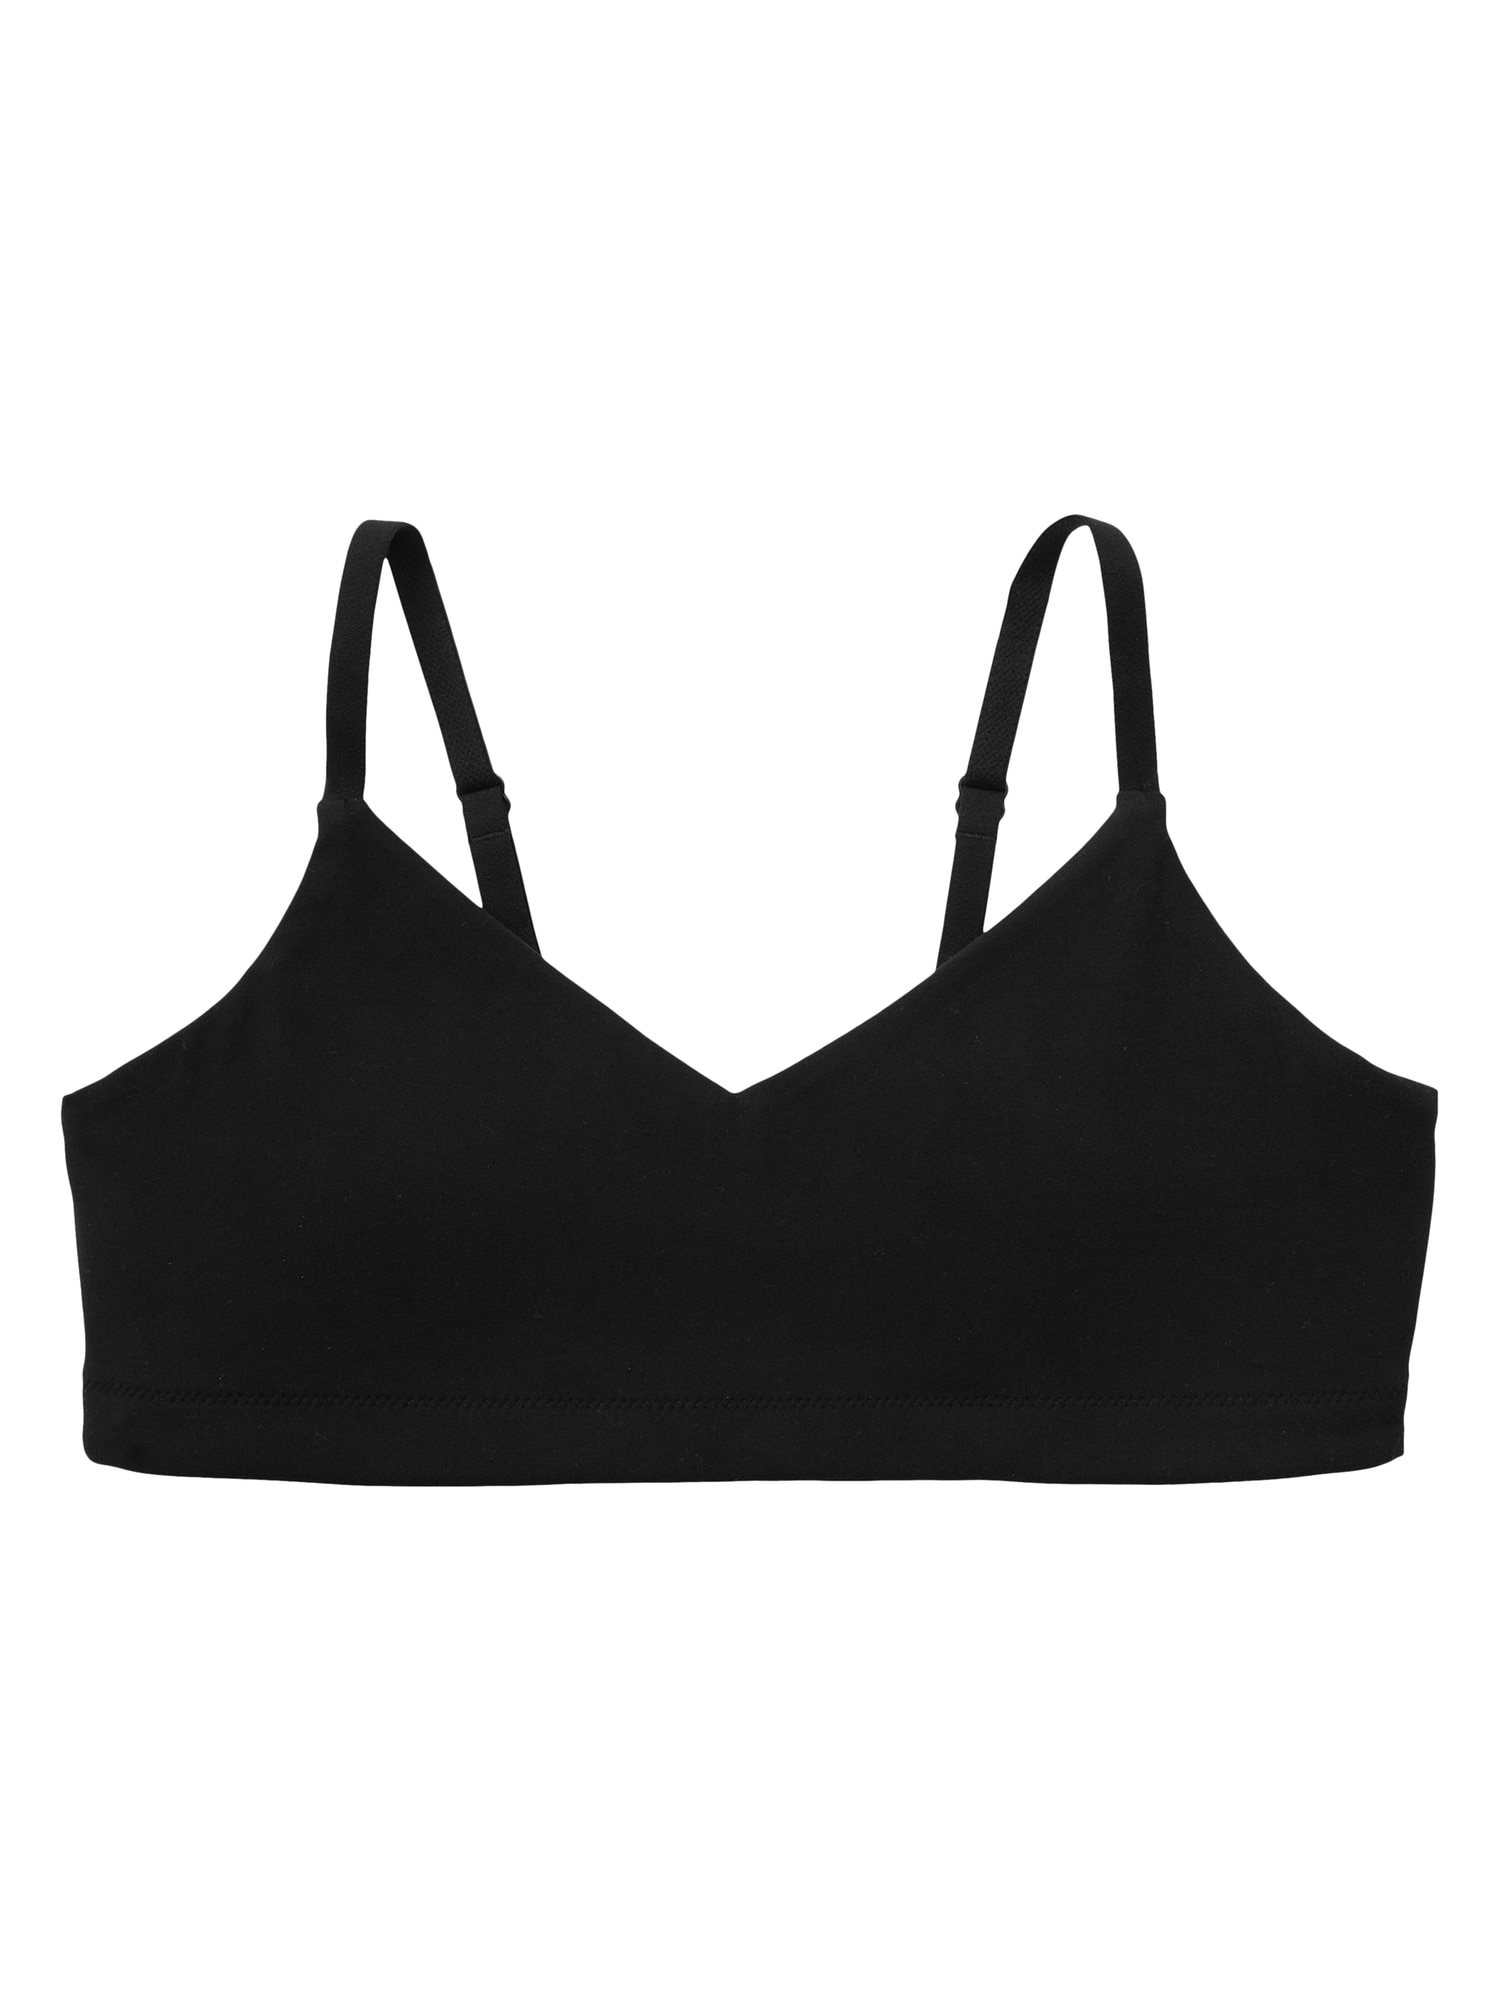 Athleta sports bra 34D black adjustable lightly padded non